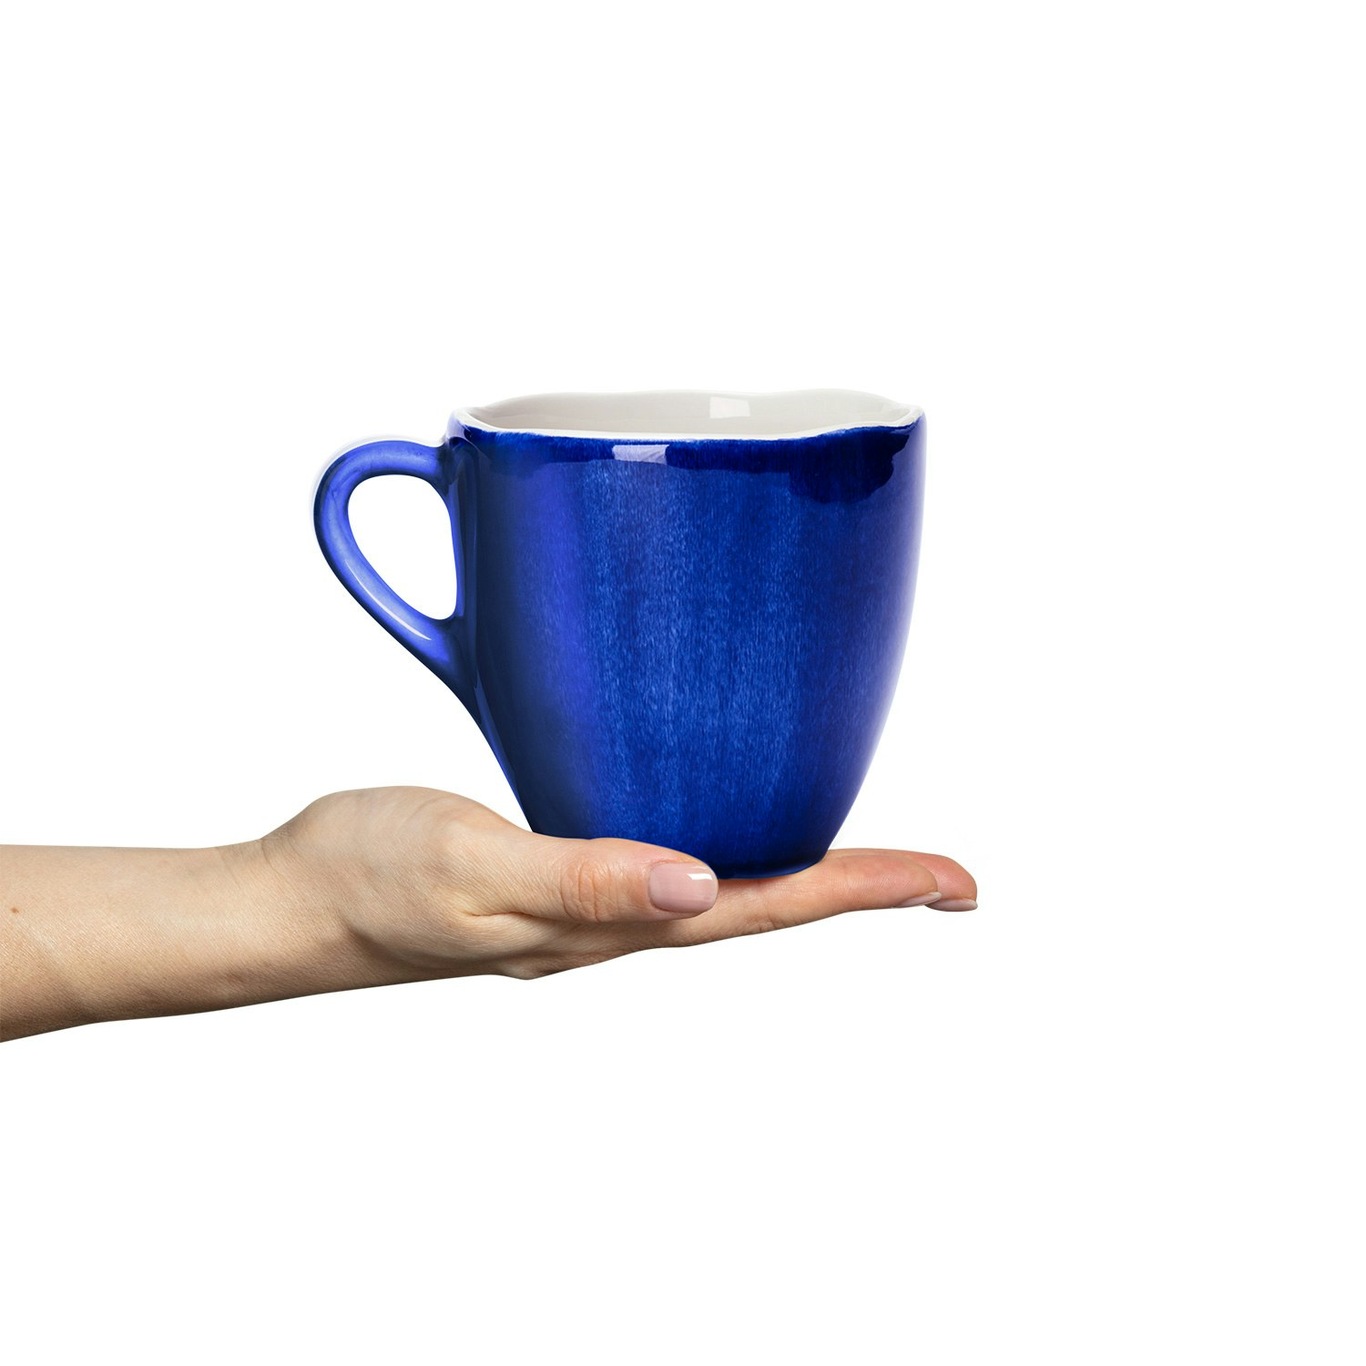 https://royaldesign.com/image/2/mateus-basic-coffee-mug-60-cl-4?w=800&quality=80